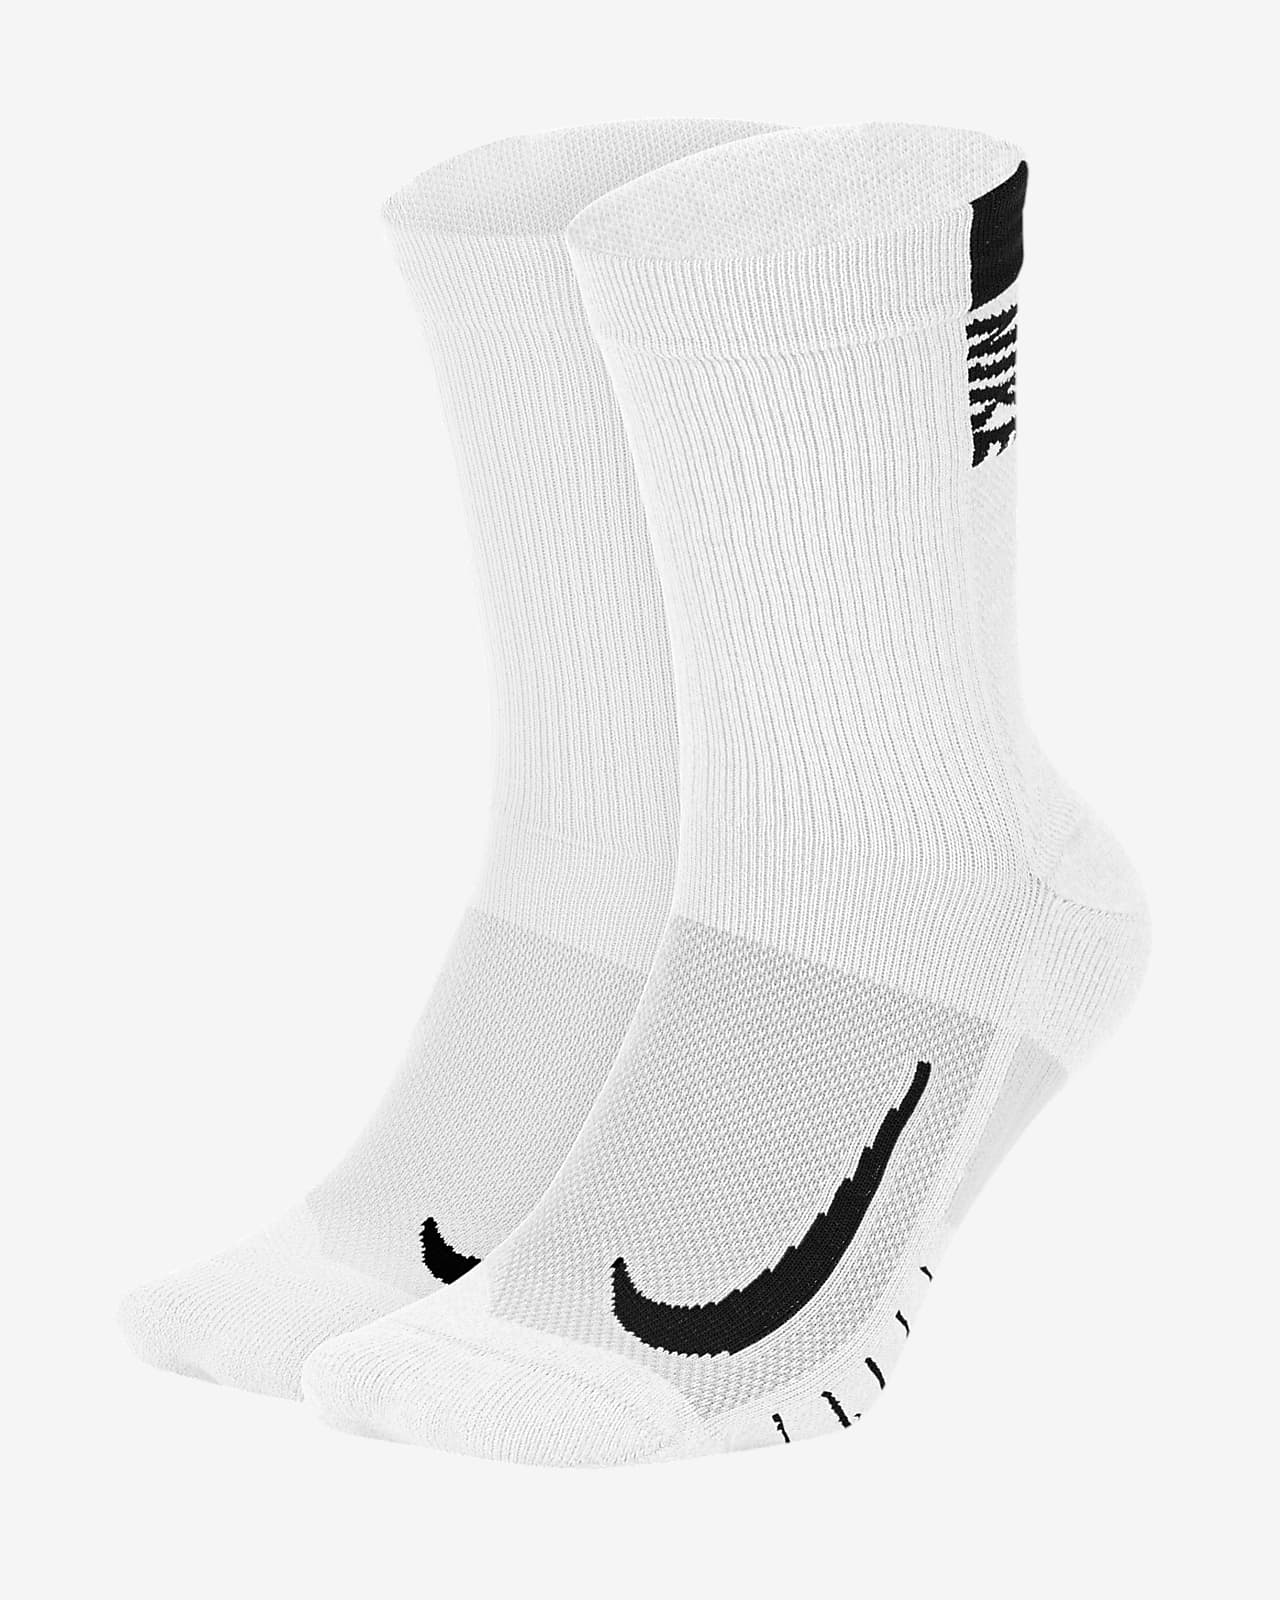 Calcetas Nike Multiplier (2 pares)